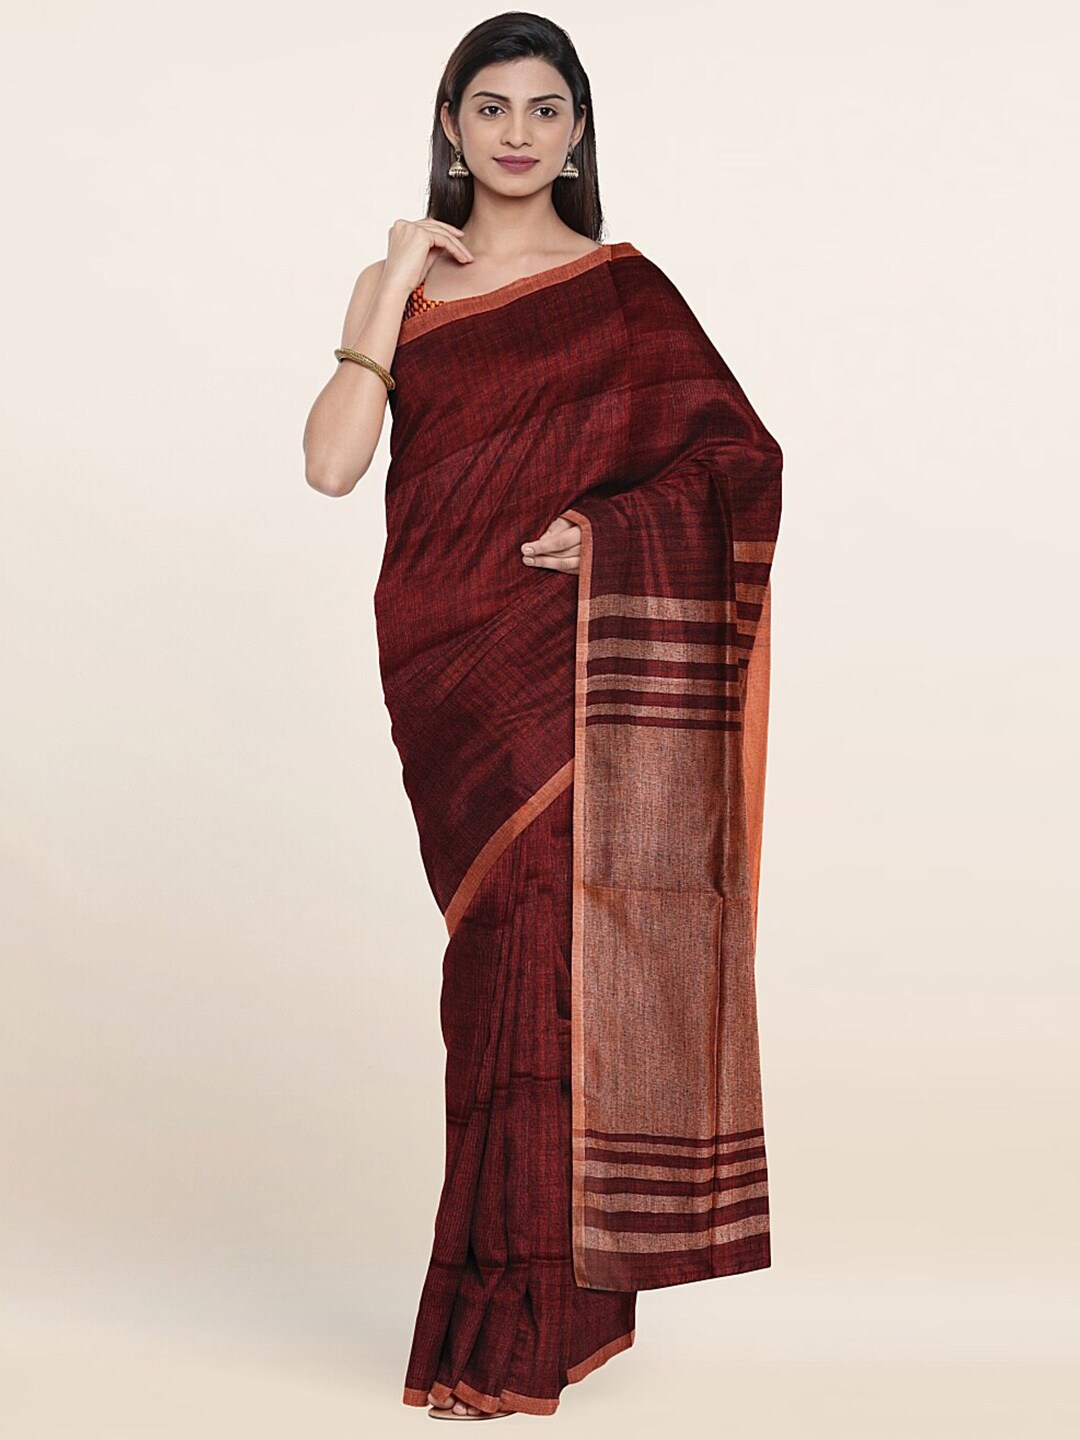 Pothys Maroon Zari Linen Blend Saree Price in India